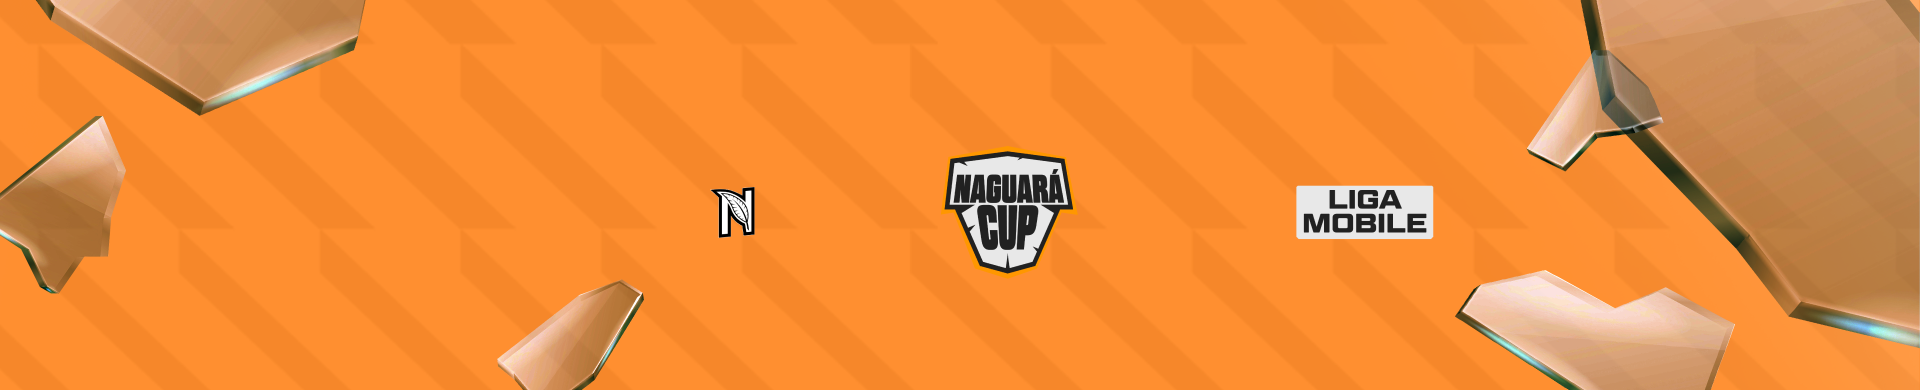 Naguará Cup Mobile Serie C Q1 - FreeFire - SAC	